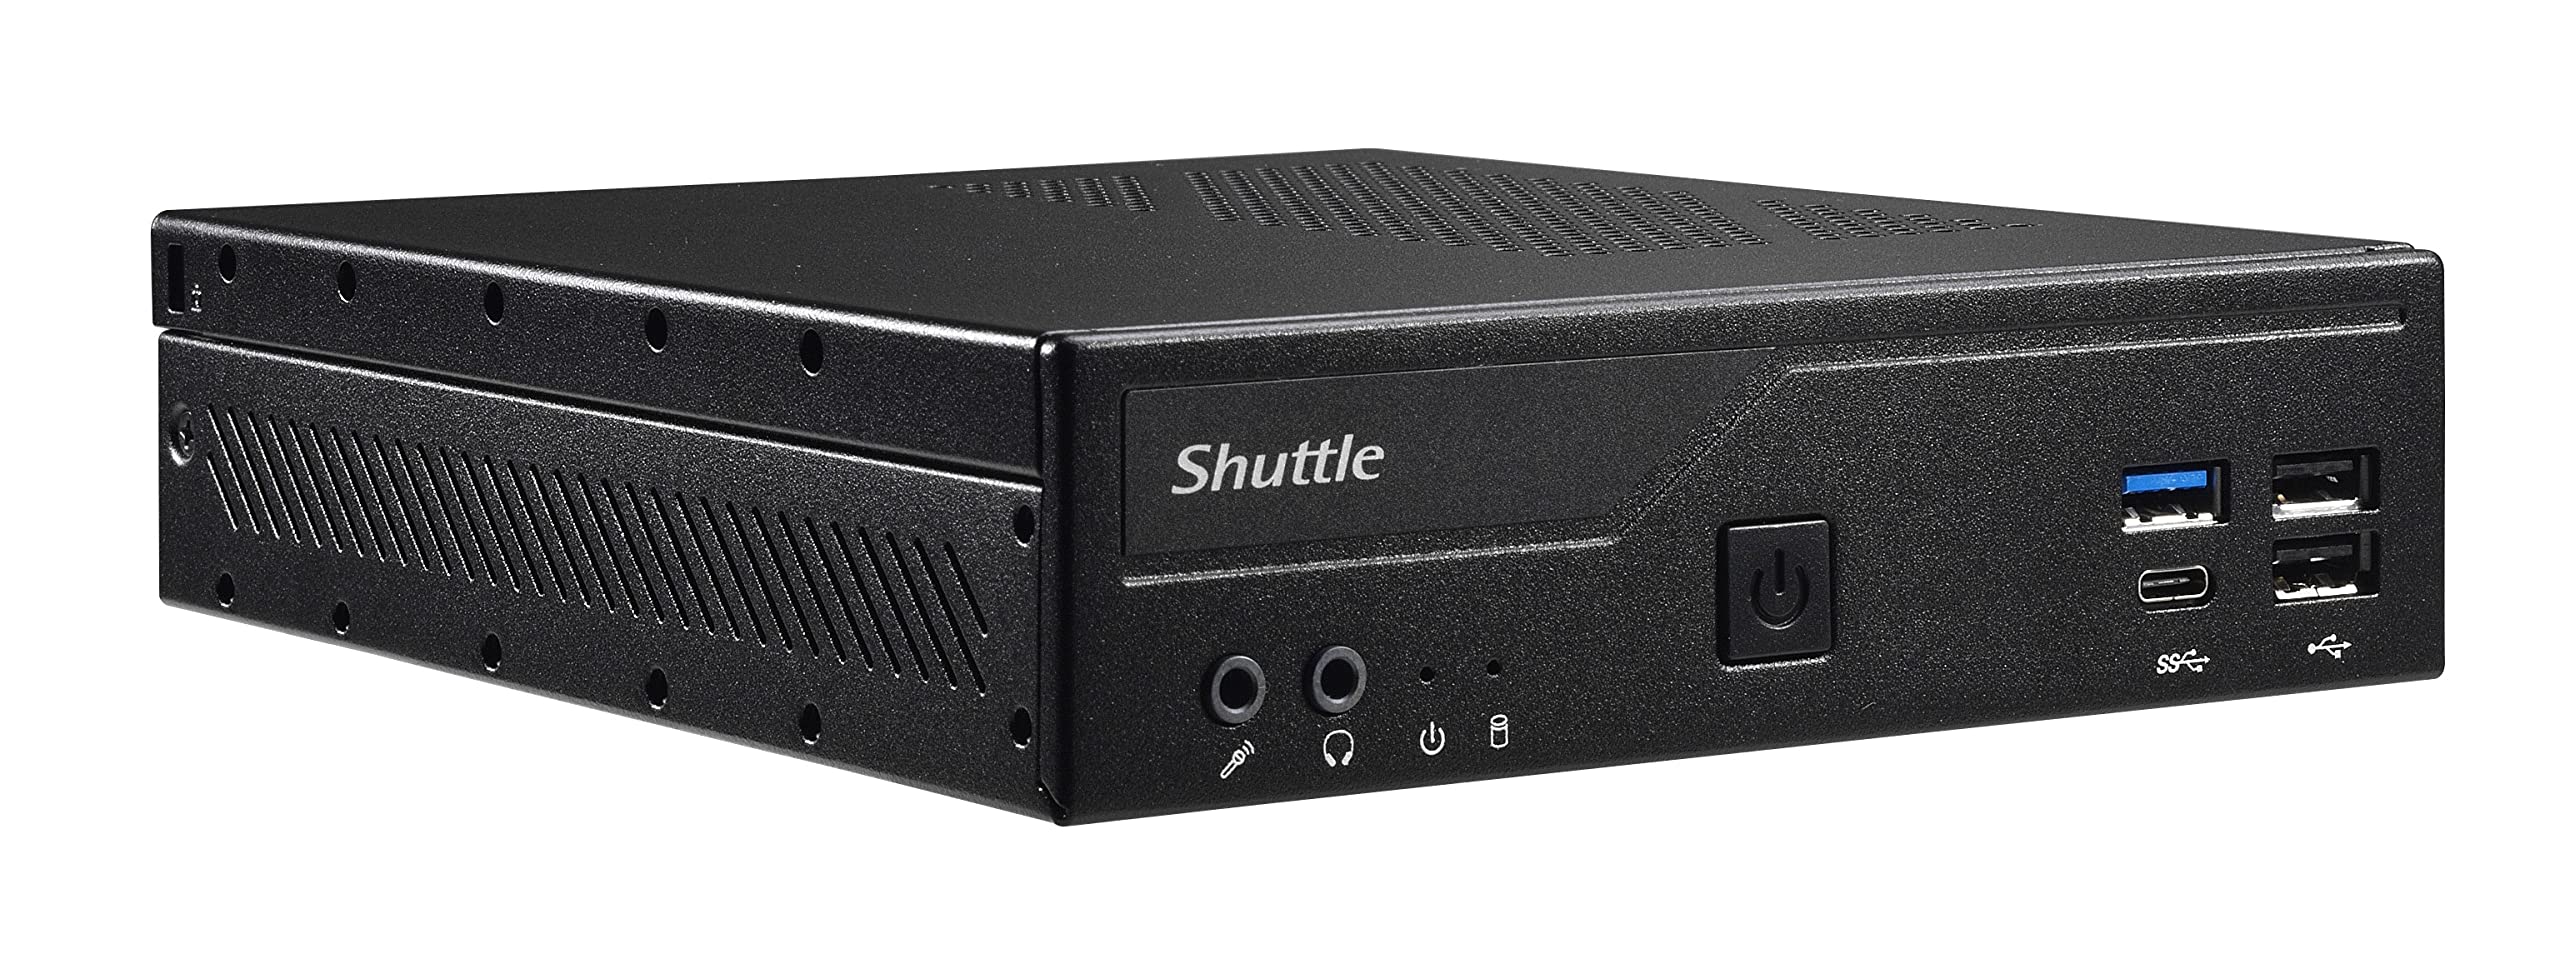 Shuttle XPC Slim DH610S Mini Barebone PC Intel H610 Support 65W Cometlake CPU No Ram No HDD/SSD No CPU No OS